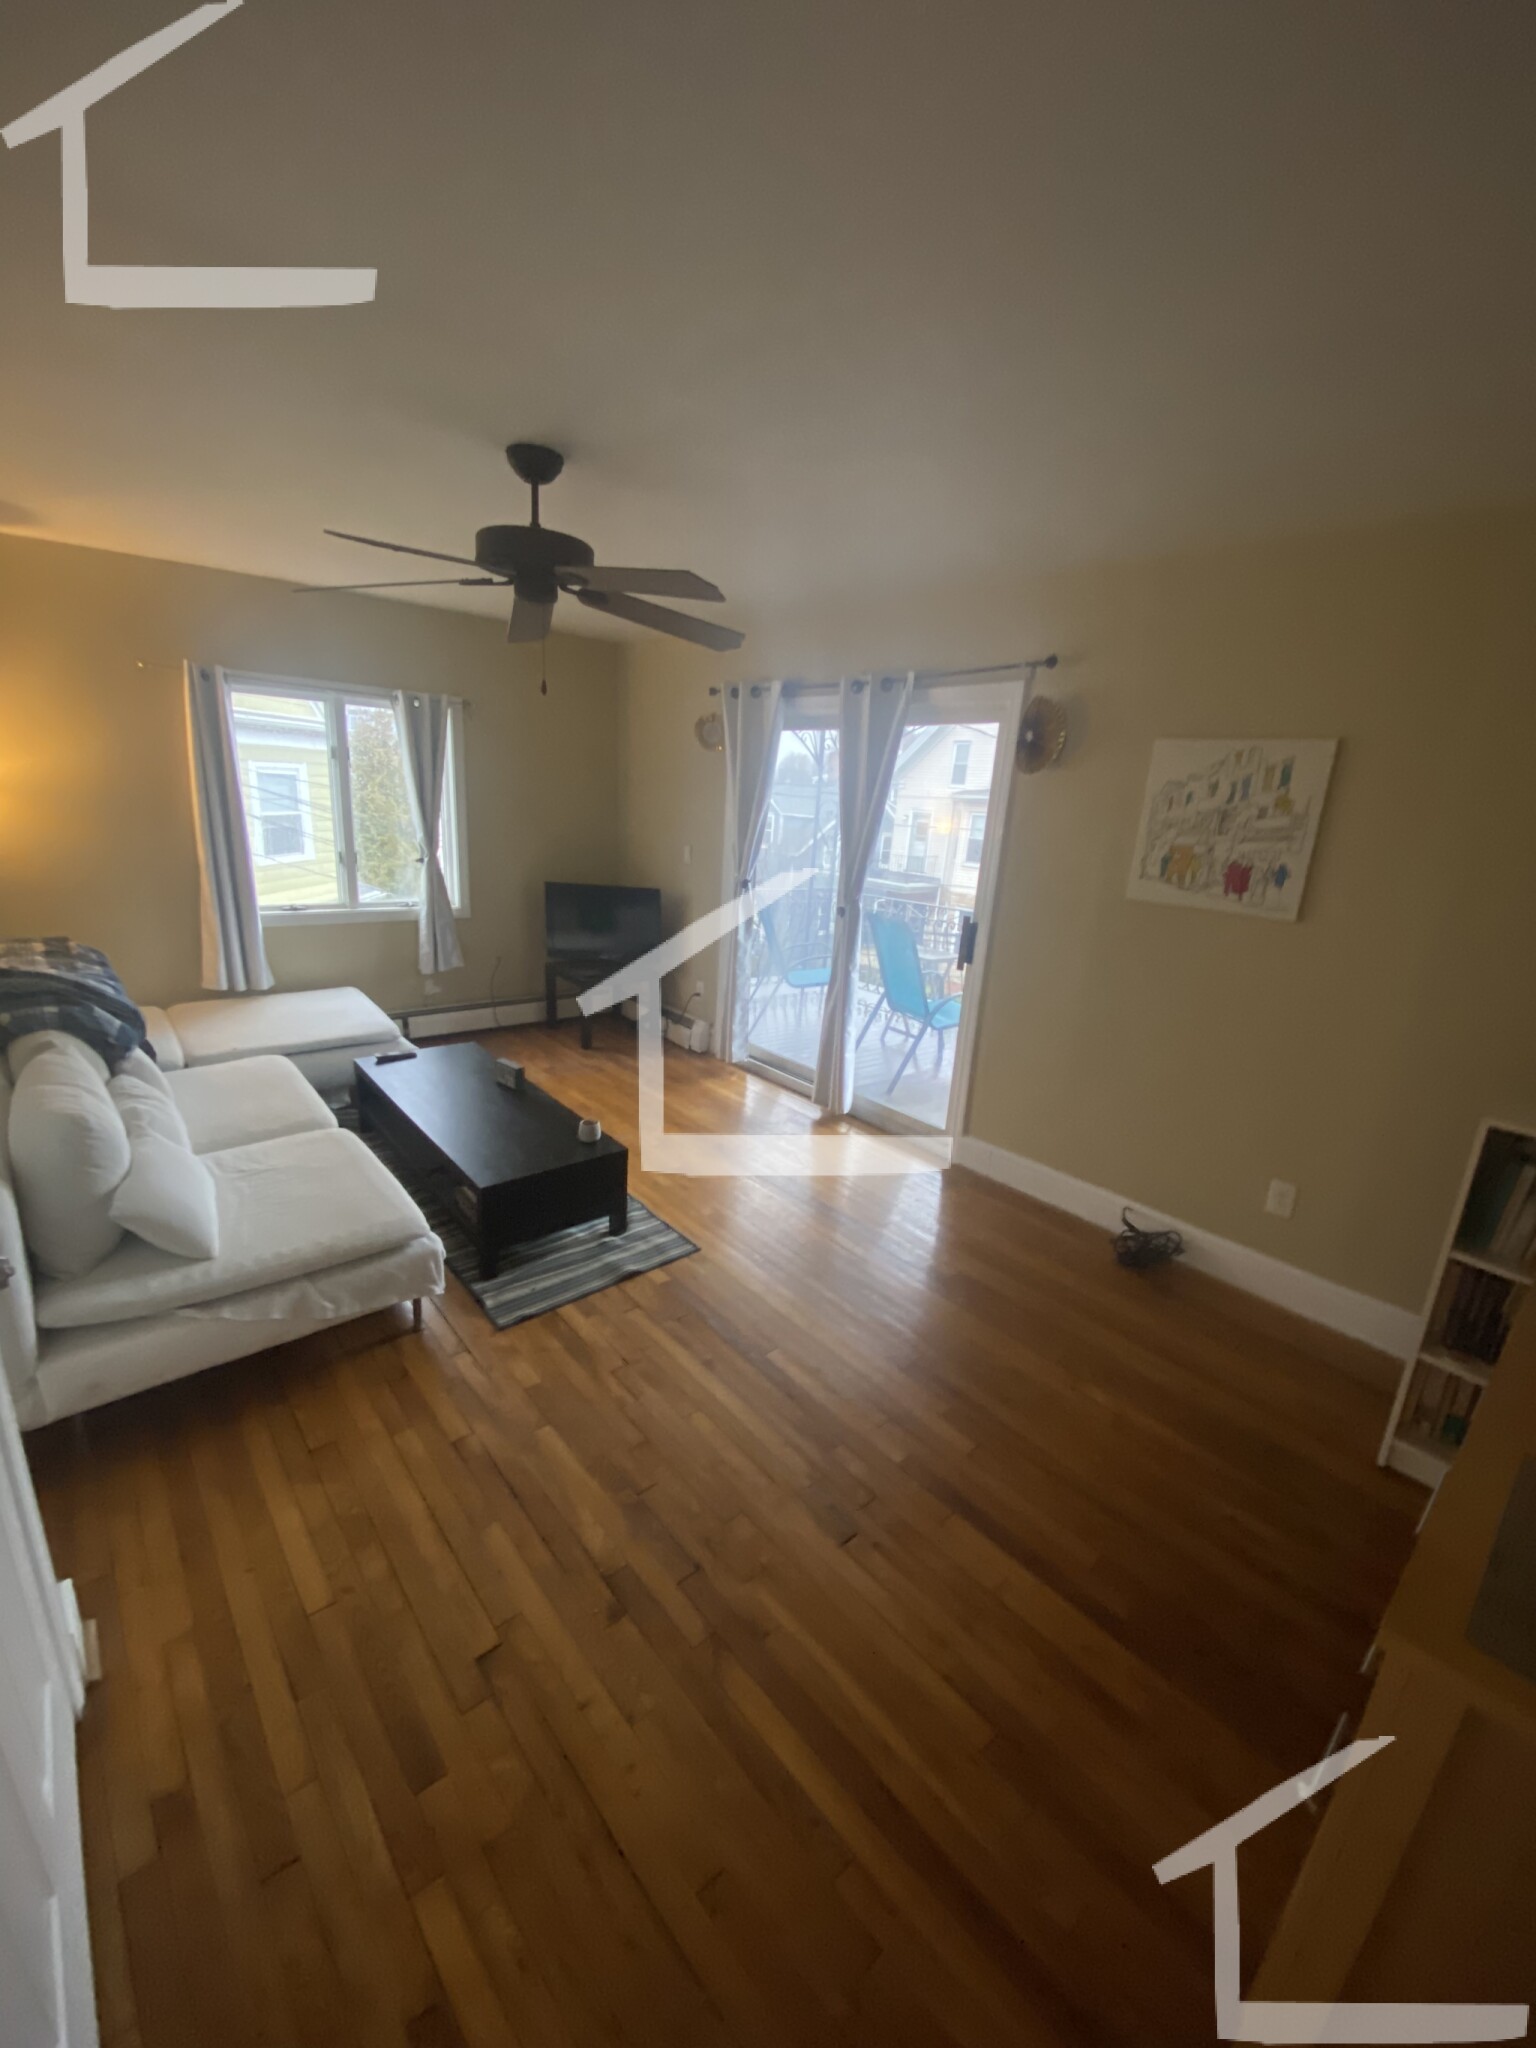 Photos of apartment on Glen St.,Somerville MA 02145